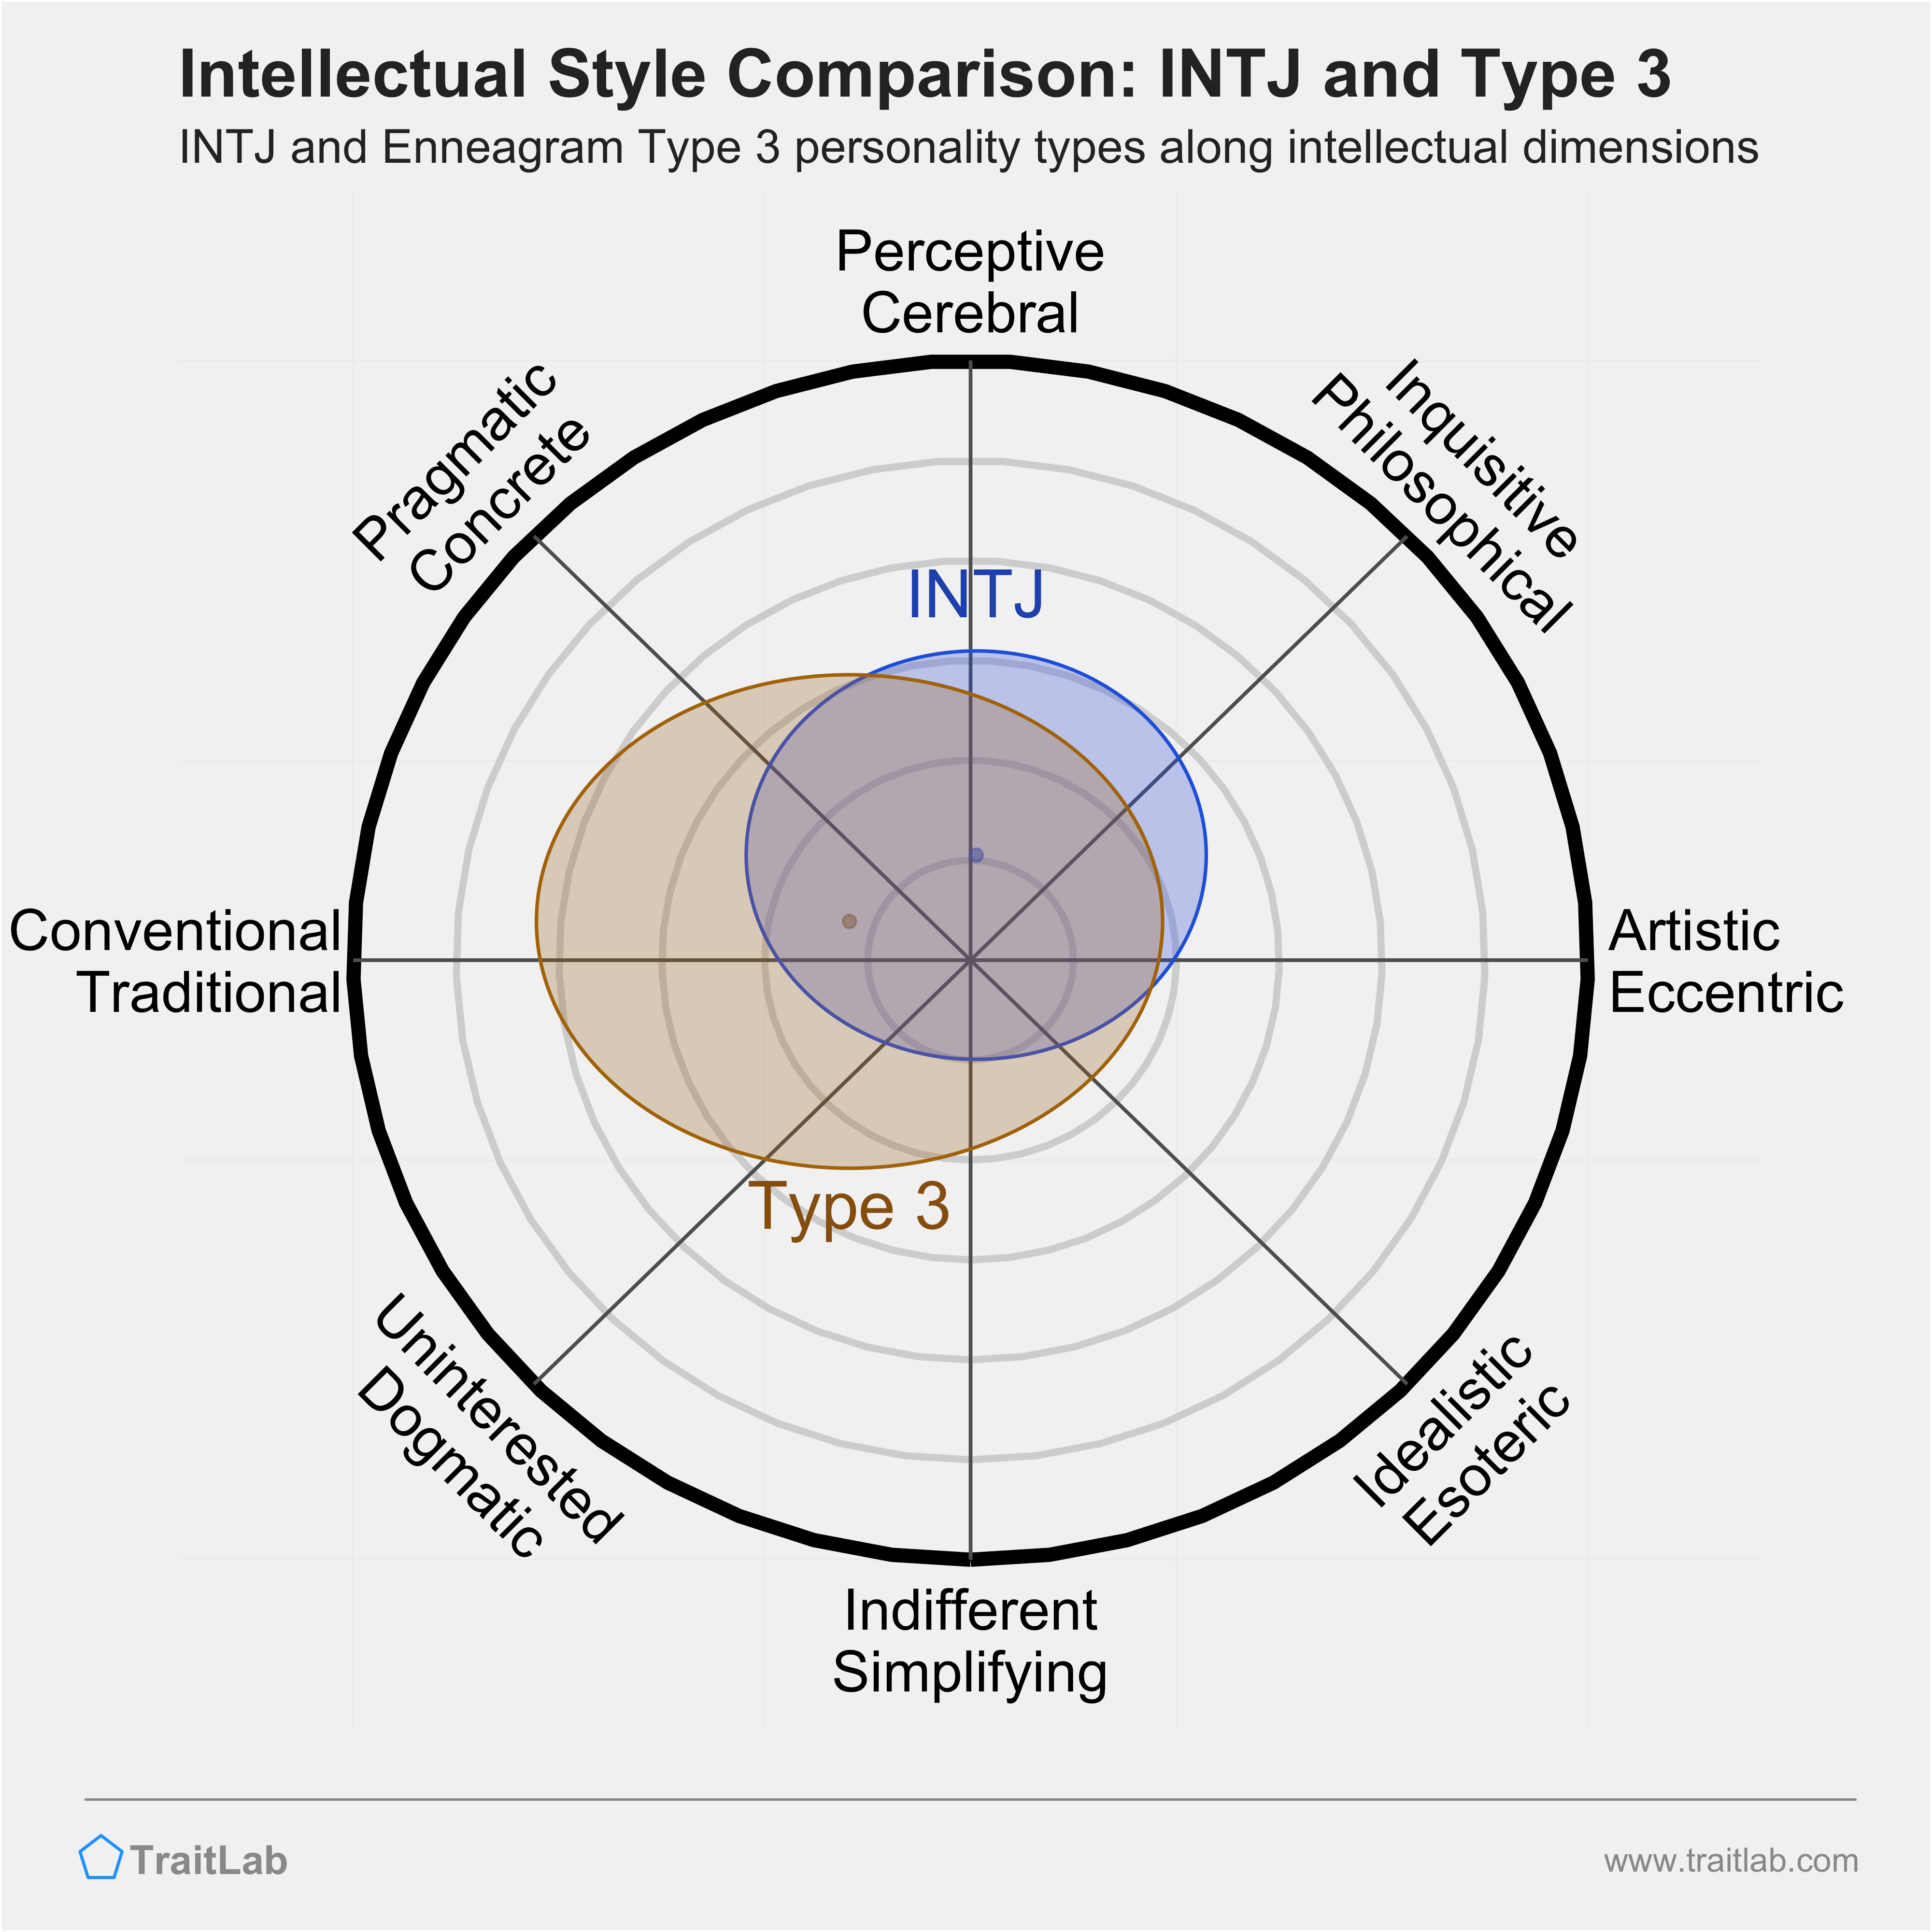 INTJ and Type 3 comparison across intellectual dimensions